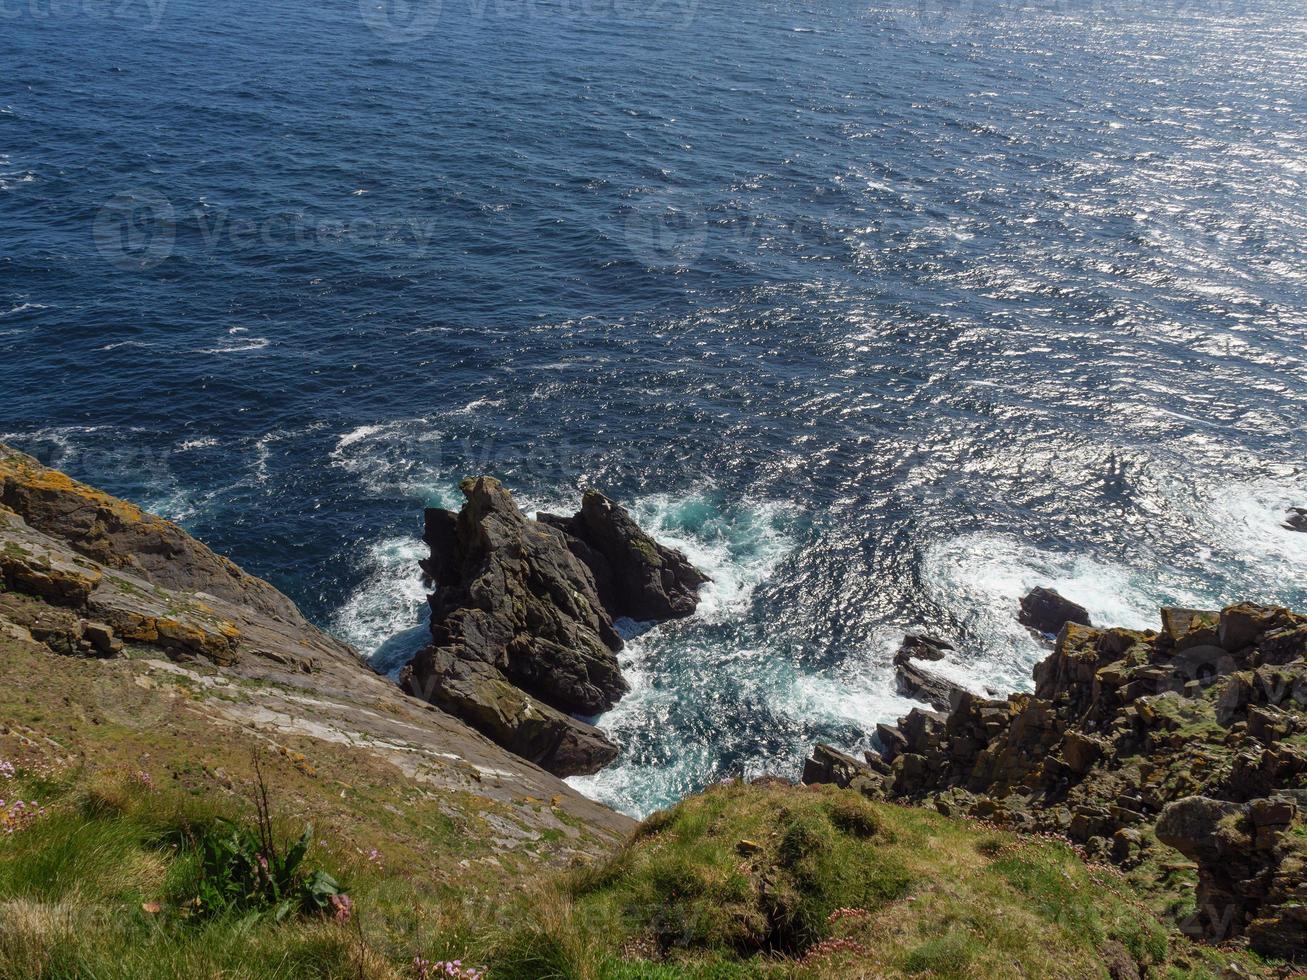 le isole Shetland in Scozia foto